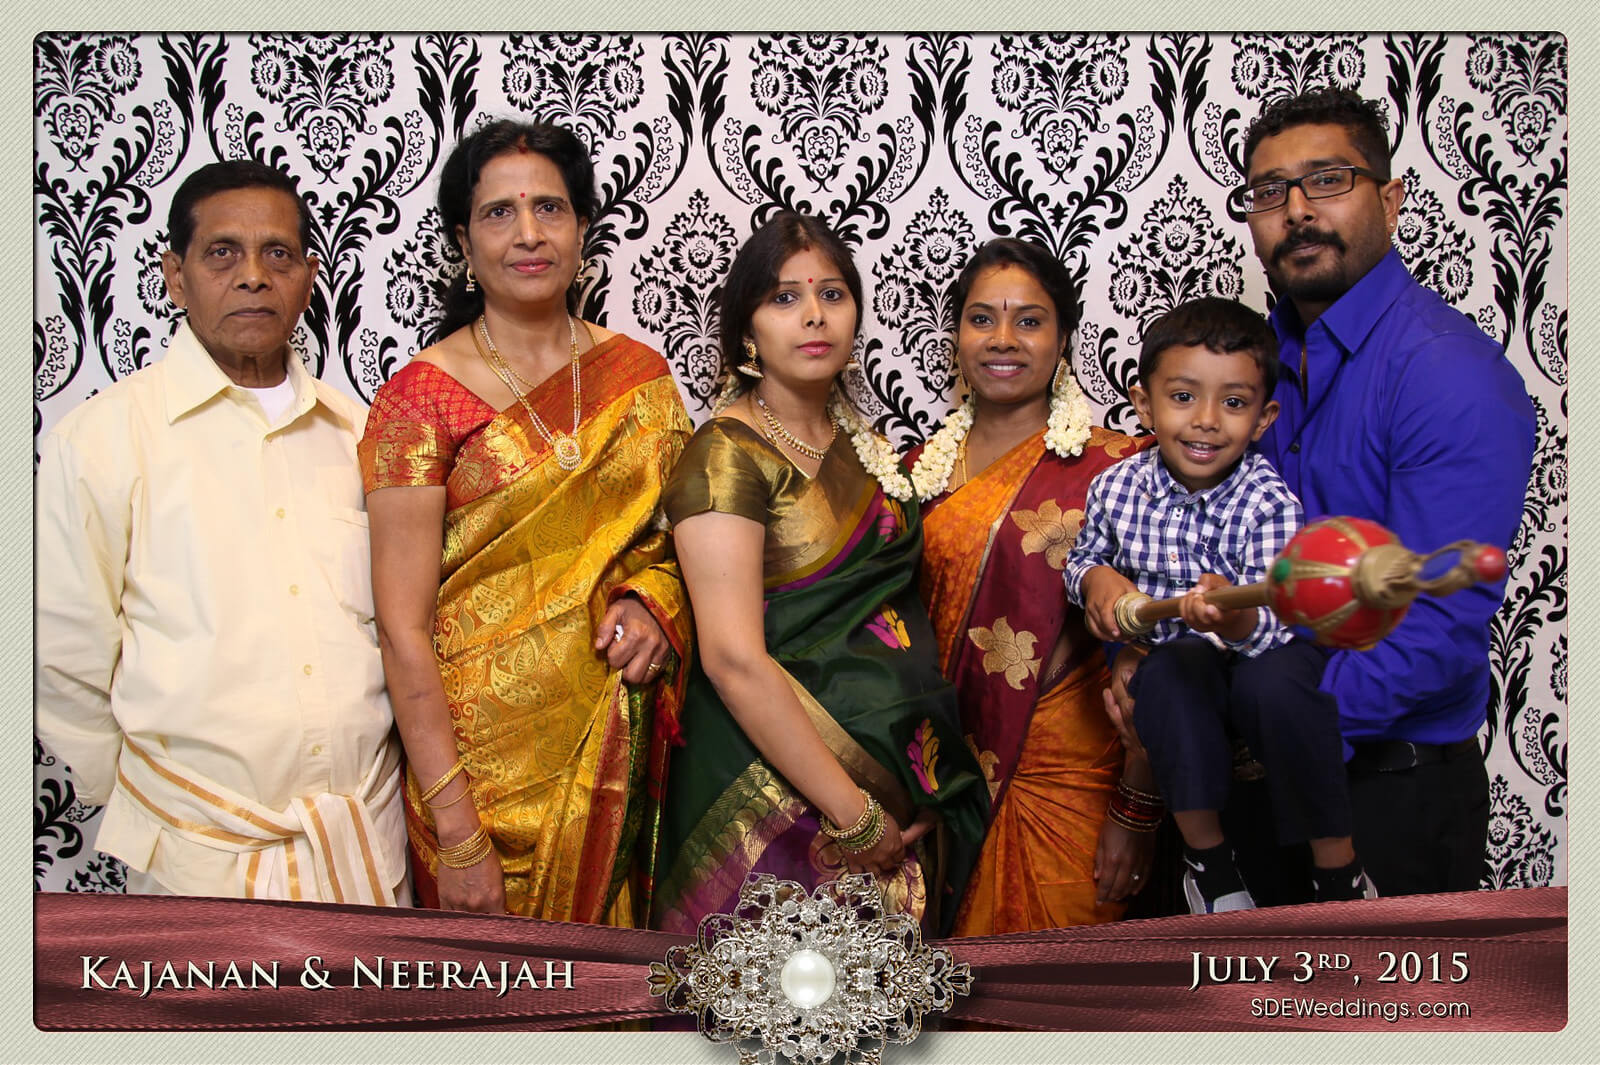 Toronto Scarborough Convention Centre Hindu Wedding Photo Booth Rental 12